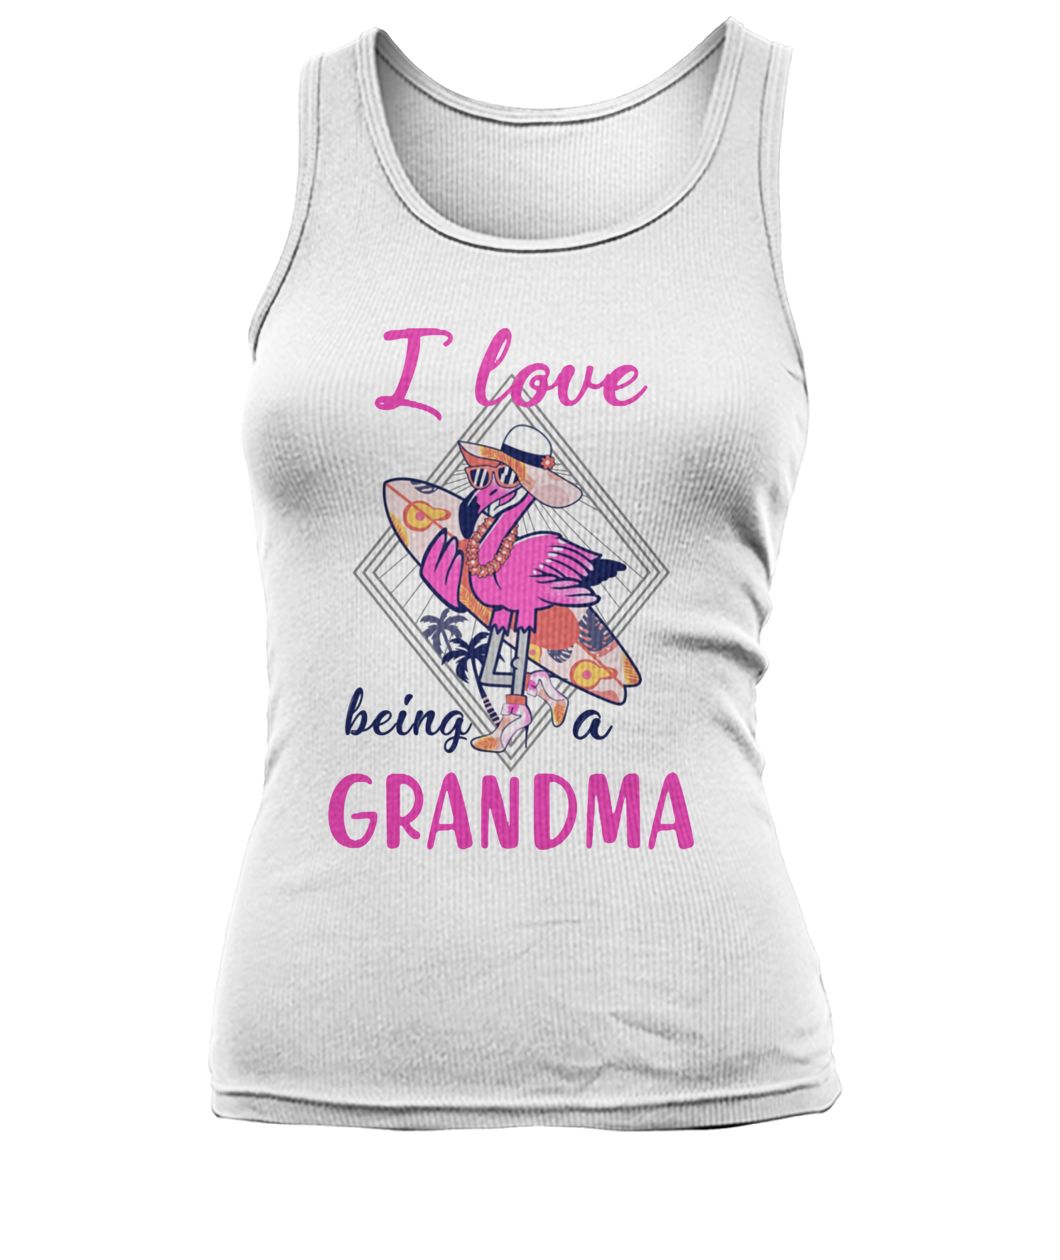 I love being a grandma flamingo women's tank top